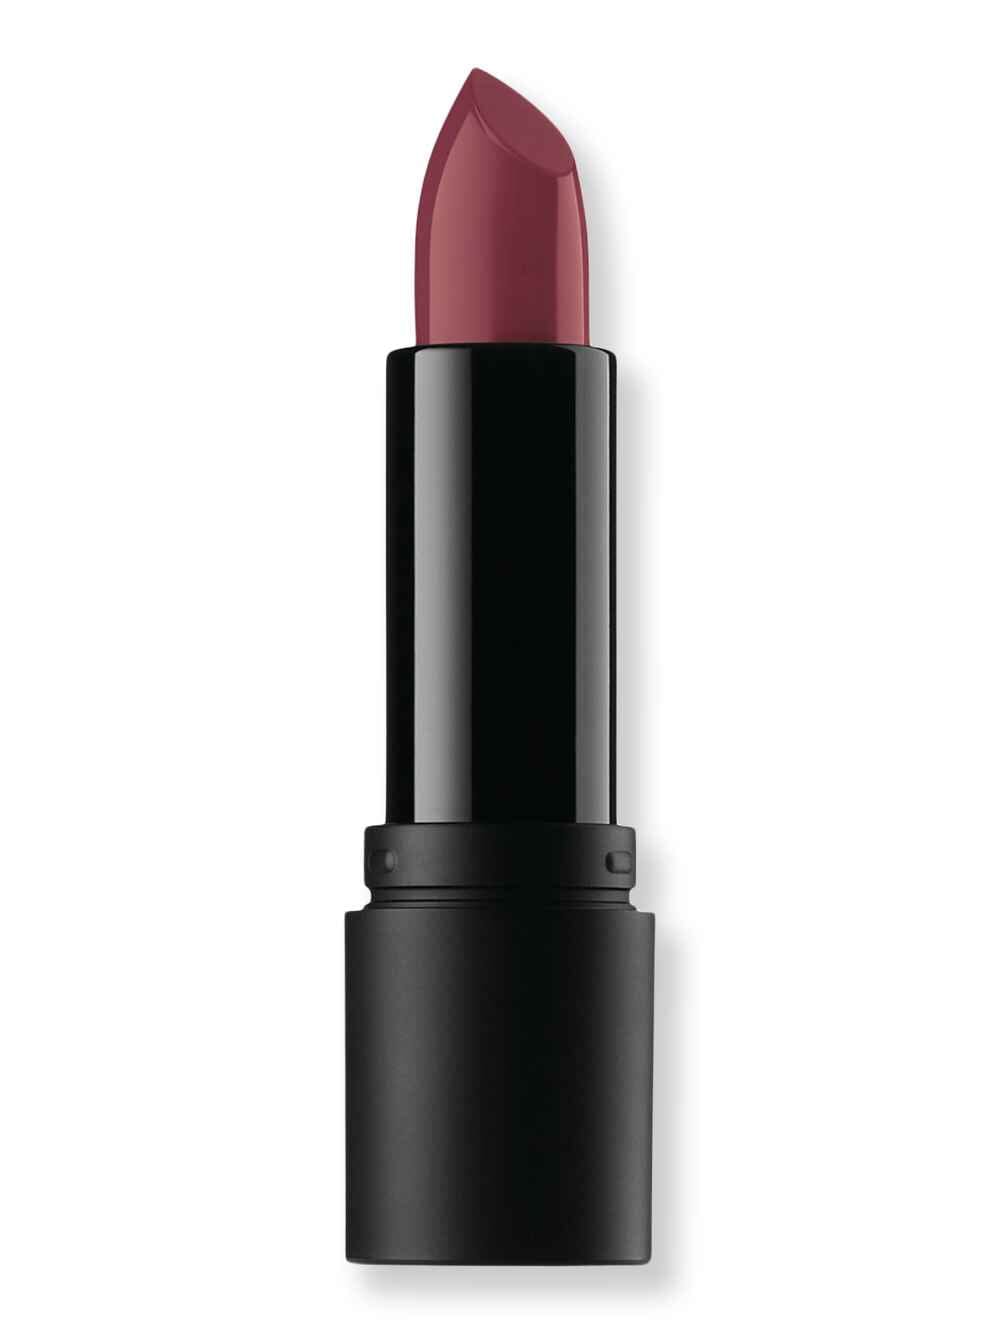 Bareminerals Bareminerals Statement Luxe Shine Lipstick NSFW 0.12 oz3.5 g Lipstick, Lip Gloss, & Lip Liners 